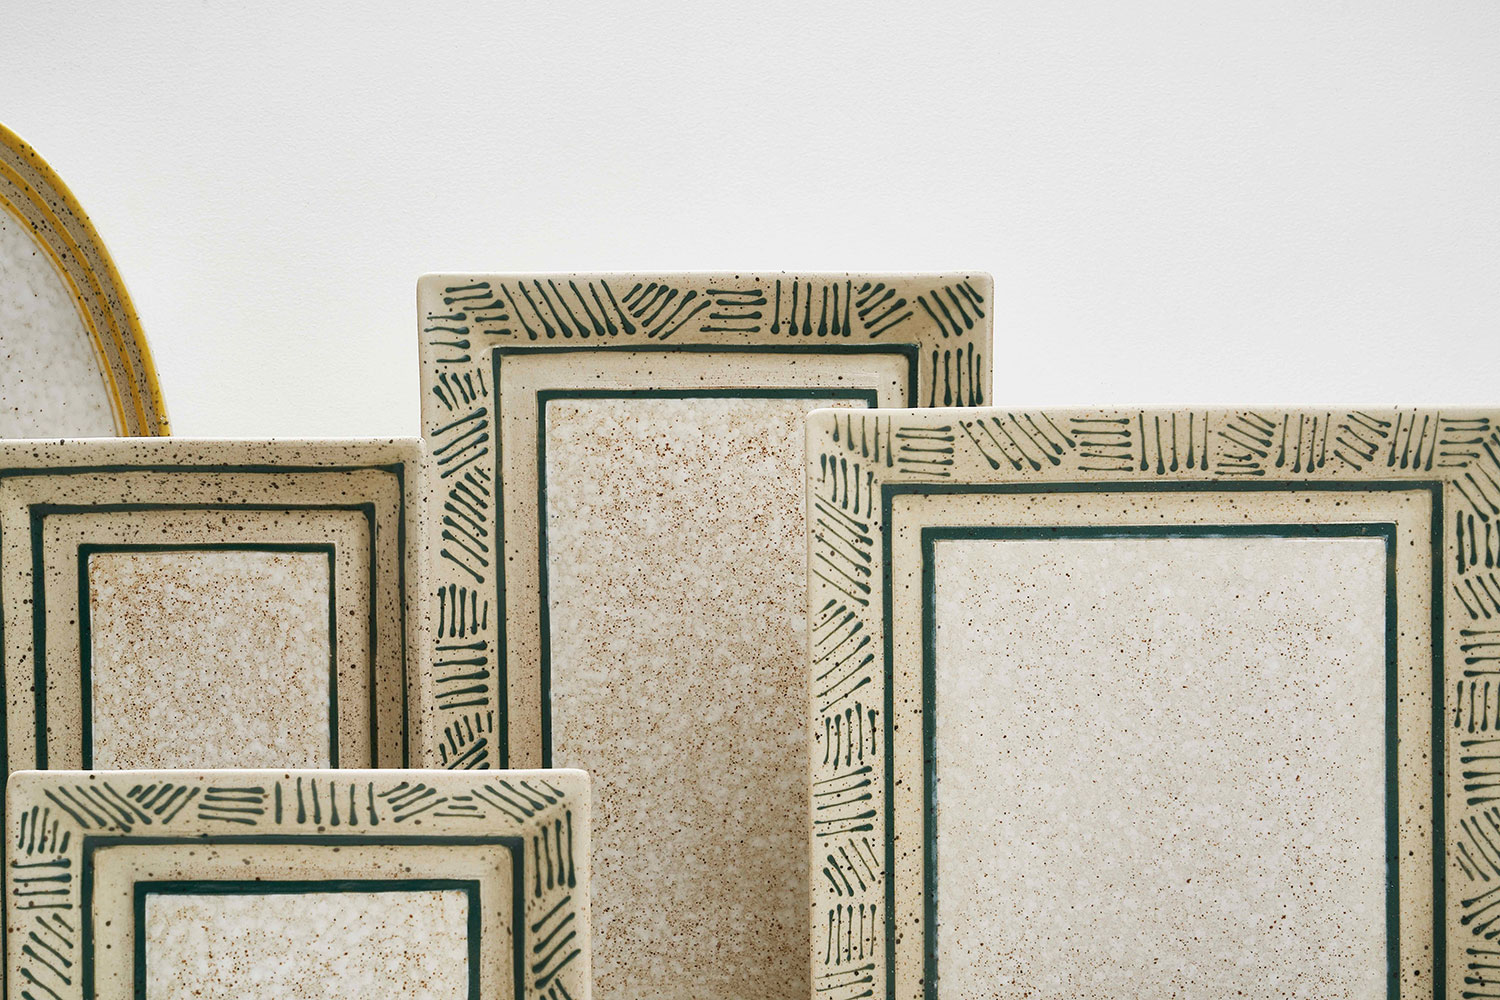 Kevala Ceramics in partnership with Jumeirah Hotel & Resort